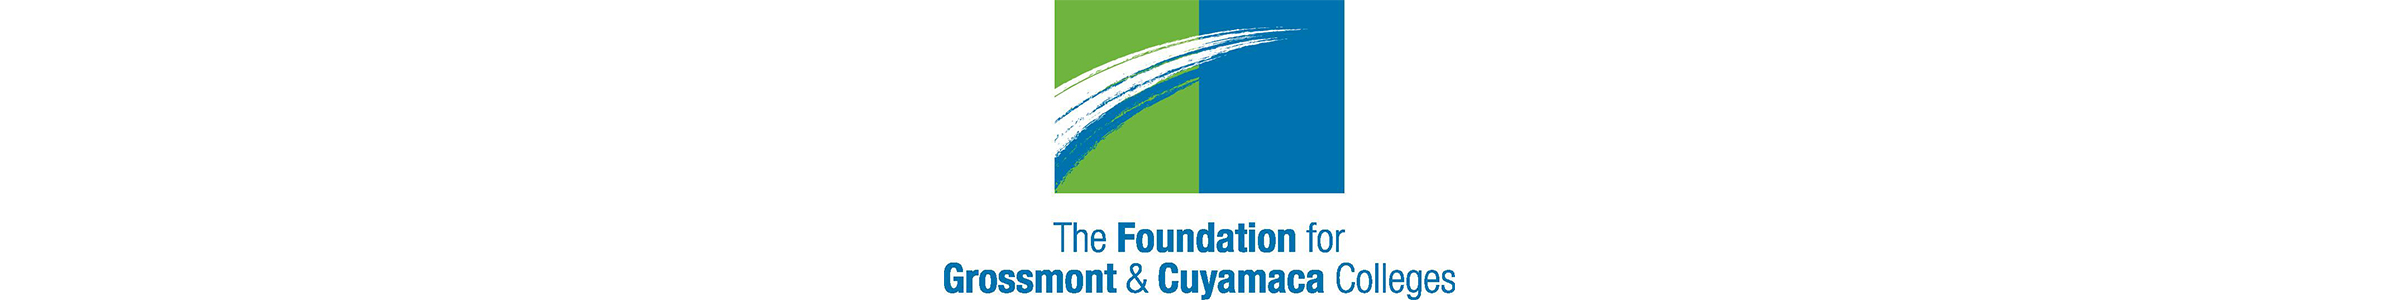 Foundation for Grossmont & Cuyamaca Colleges logo